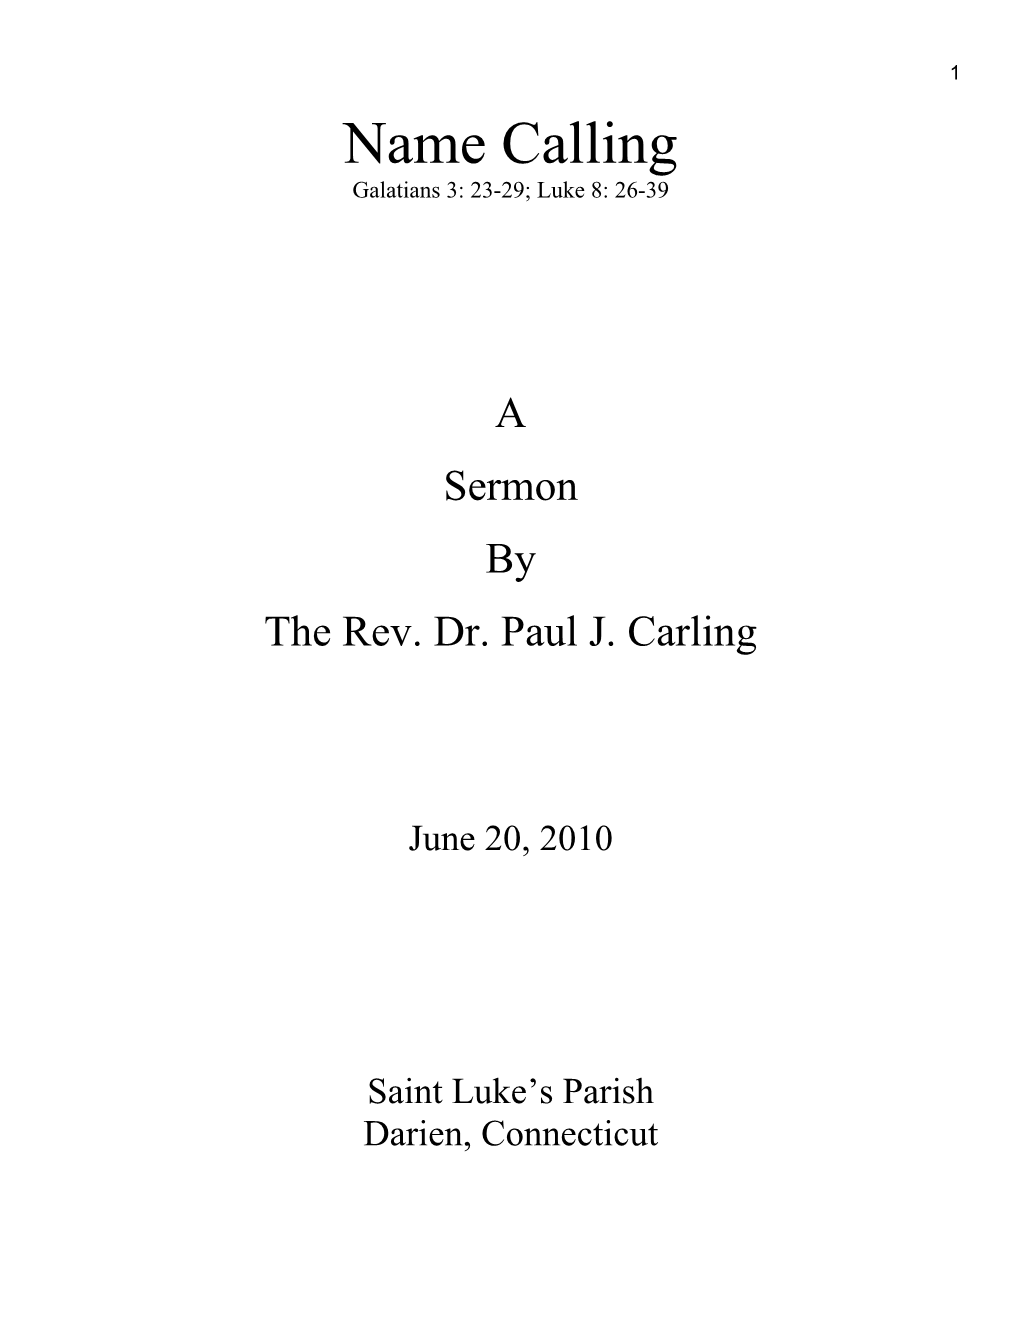 The Rev. Dr. Paul J. Carling